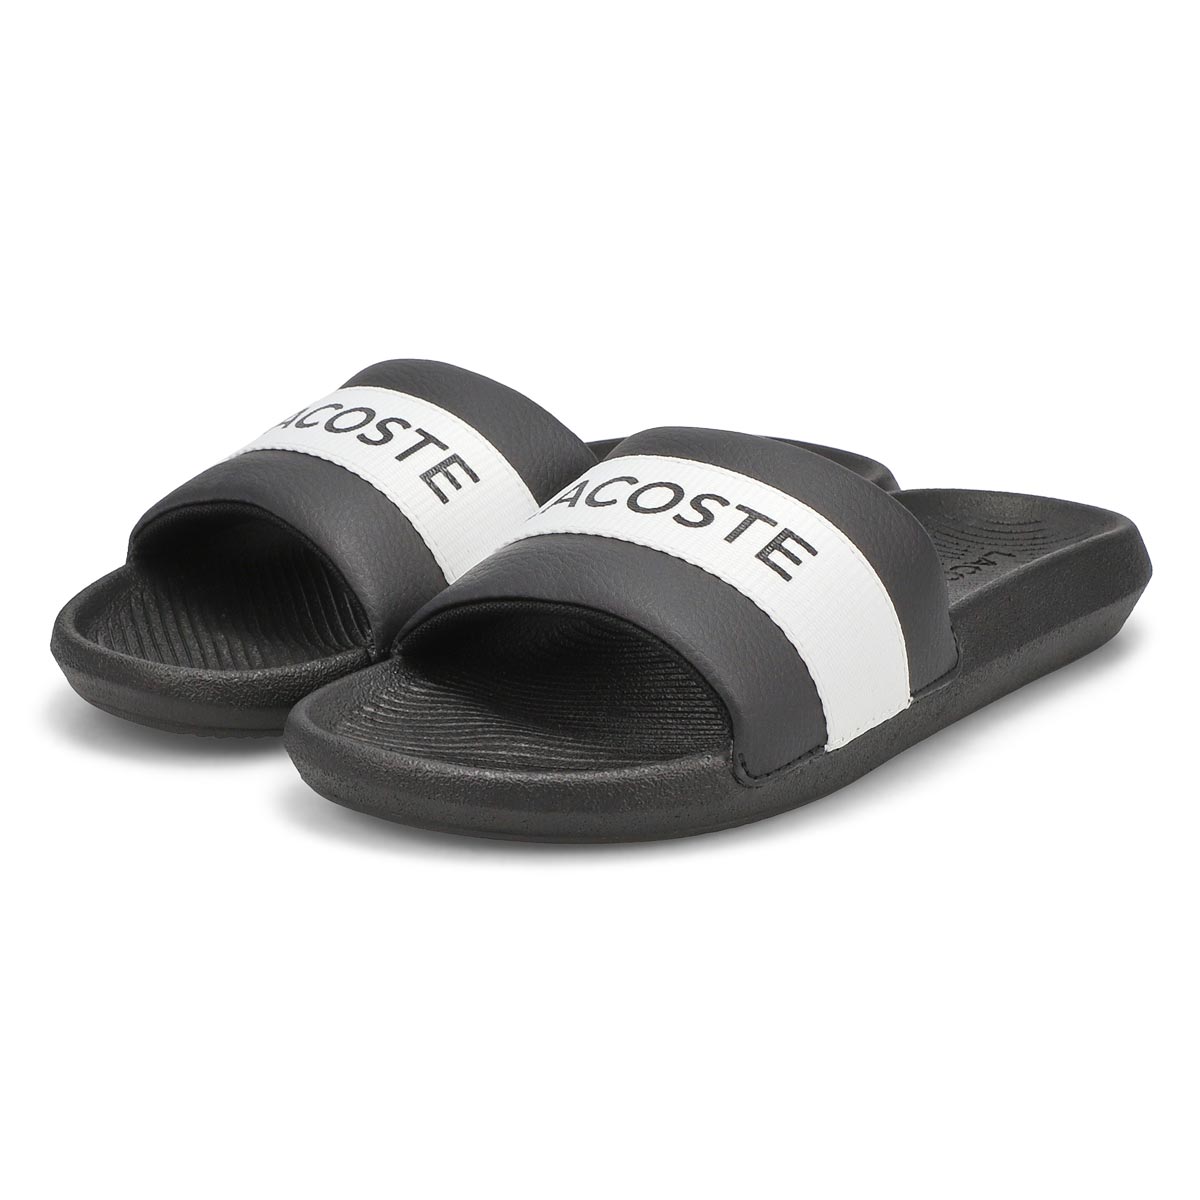 Lacoste Women's Croco Slide Sandals 